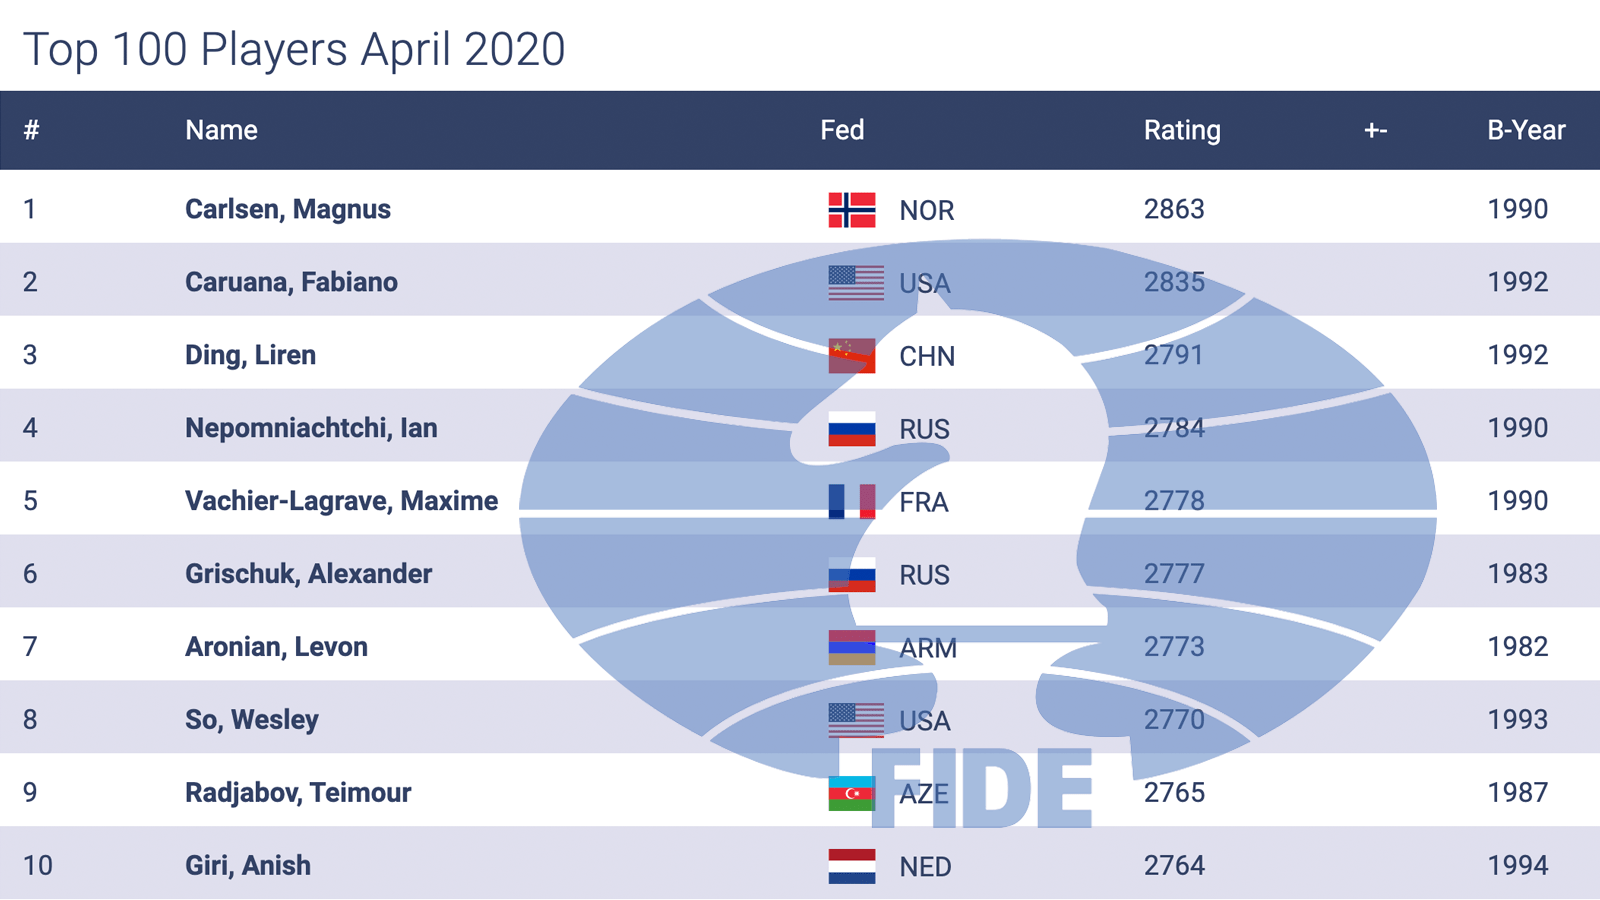 April 2019 FIDE Ratings